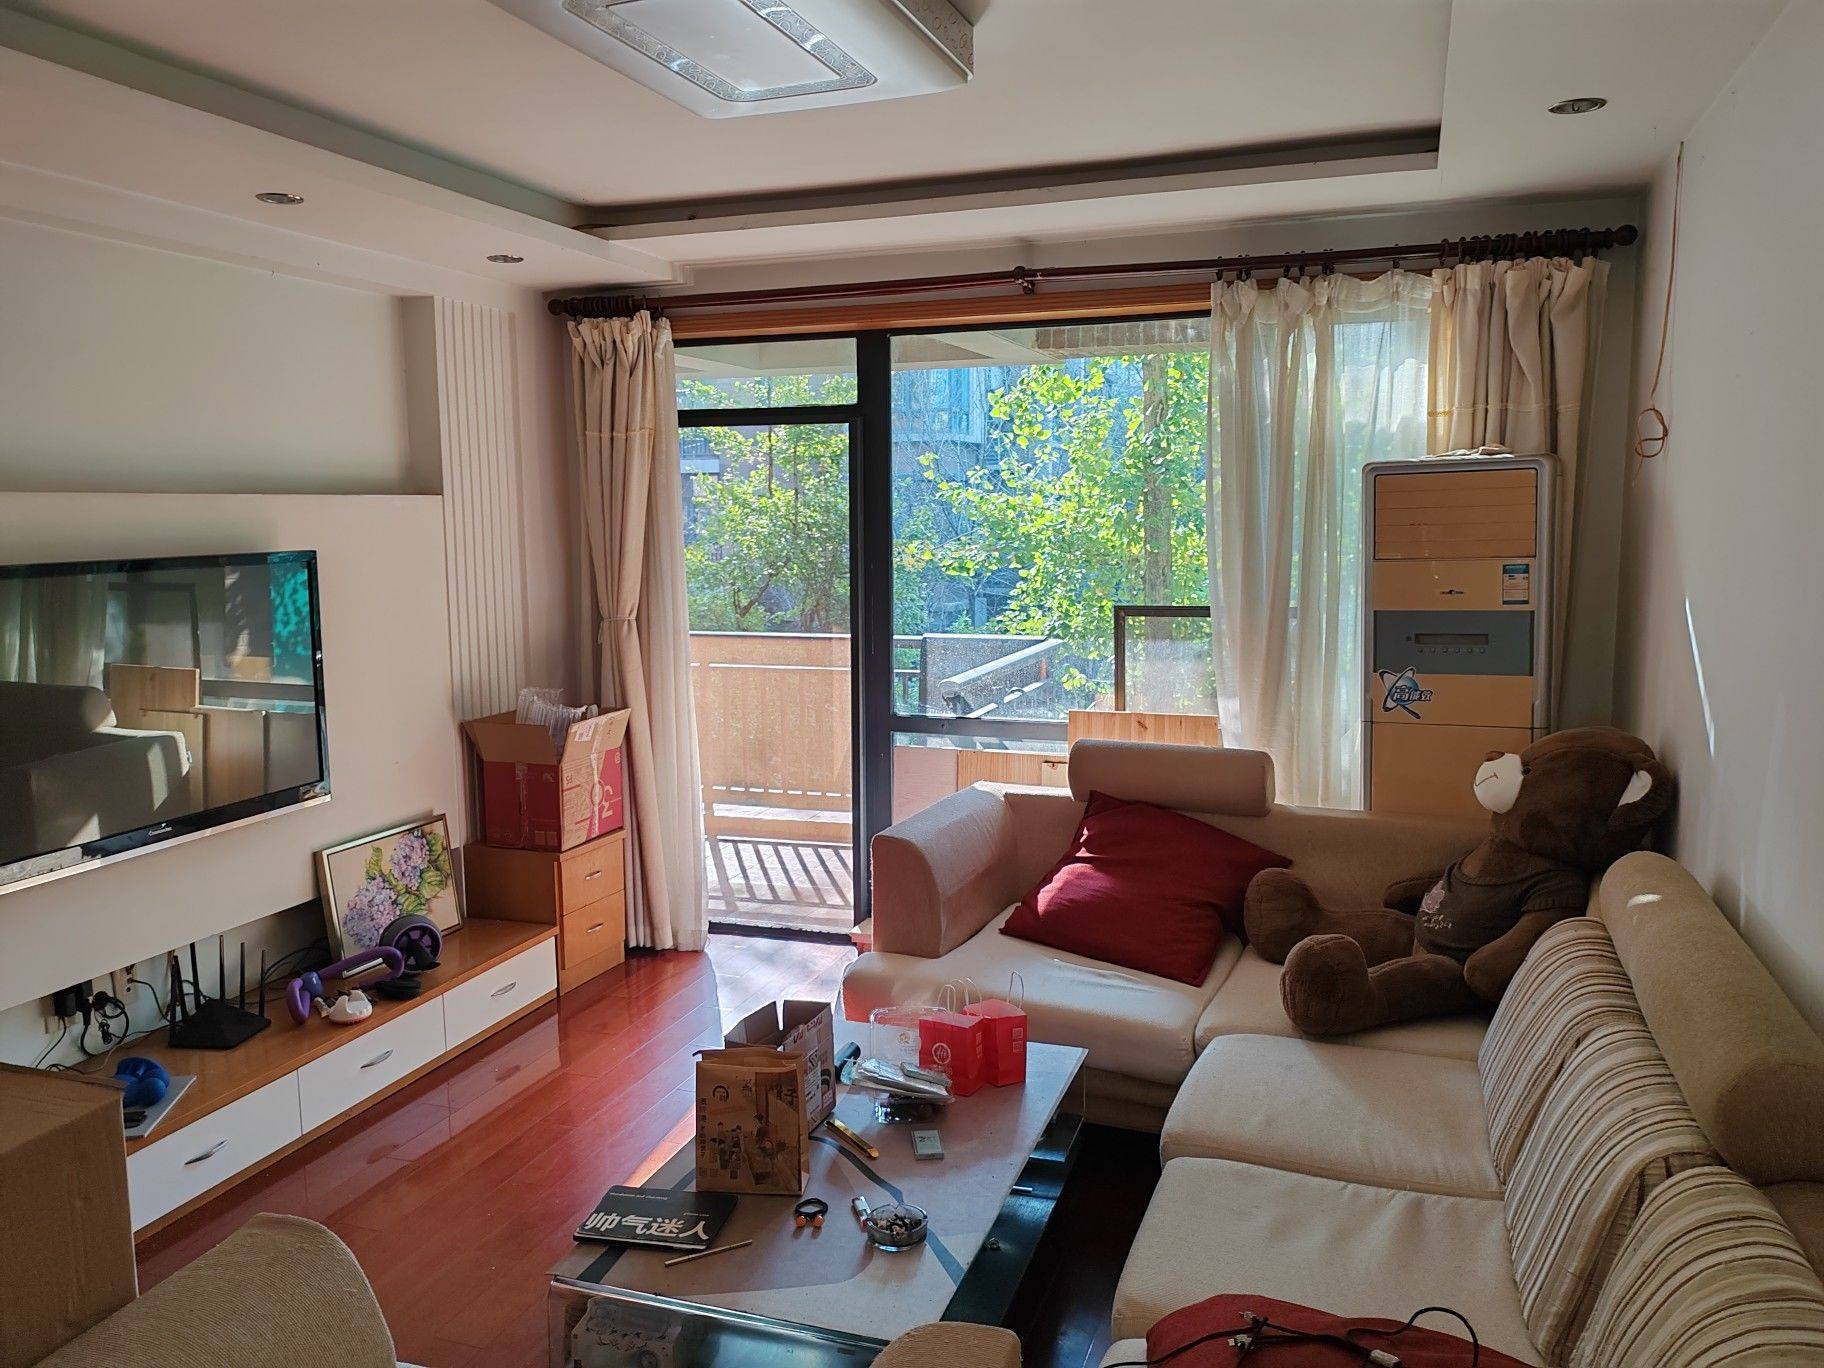 Hangzhou-Yuhang-Cozy Home,Clean&Comfy,No Gender Limit,Hustle & Bustle,Pet Friendly